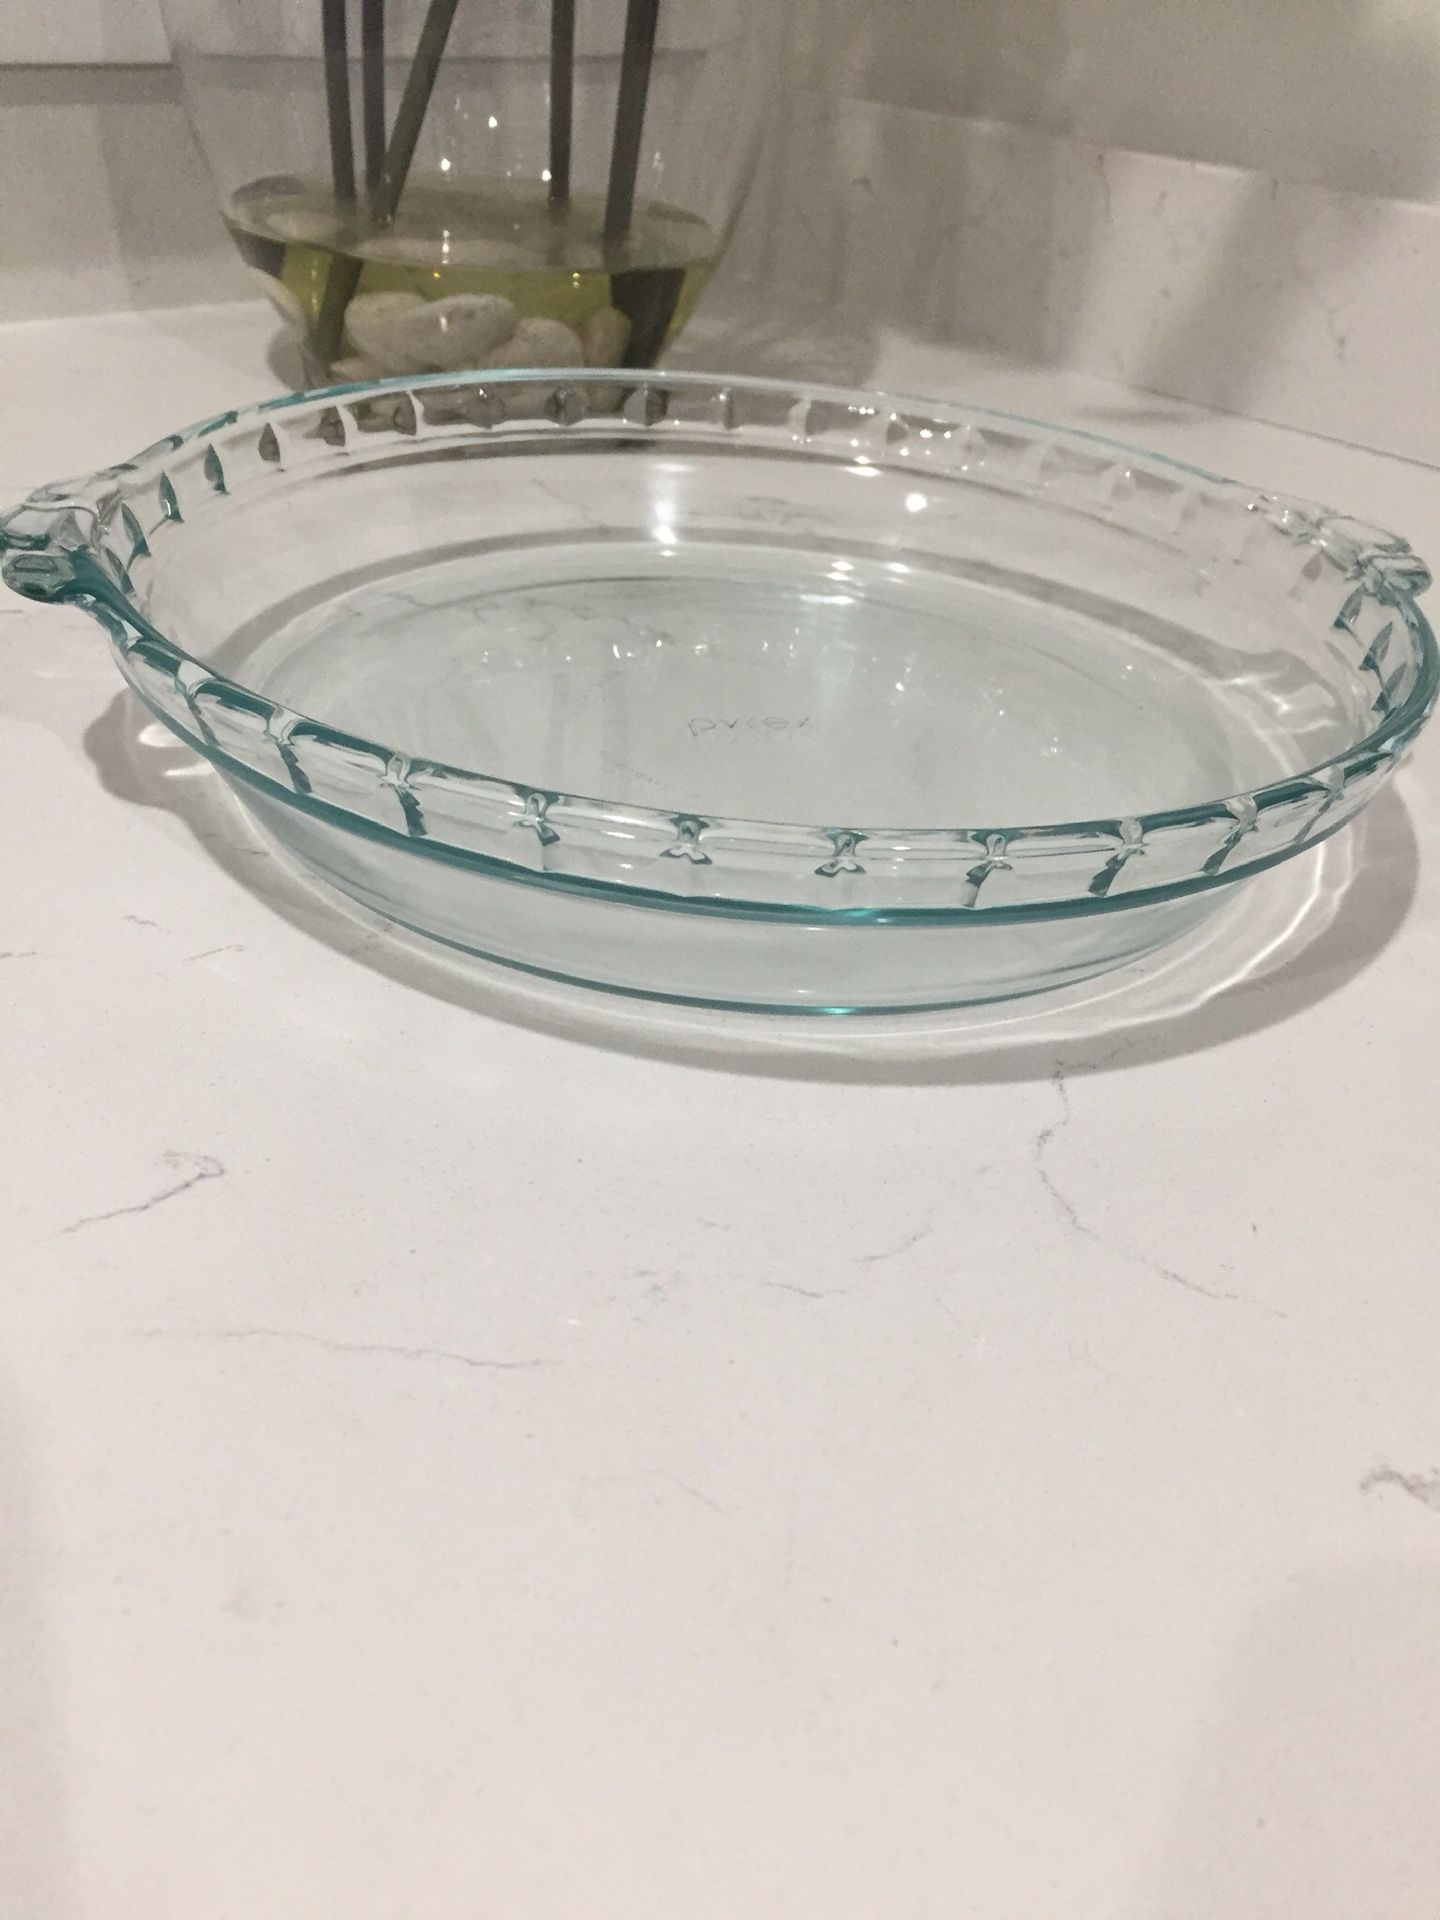 Brand New 10 inch Pyrex pie glass pan dish